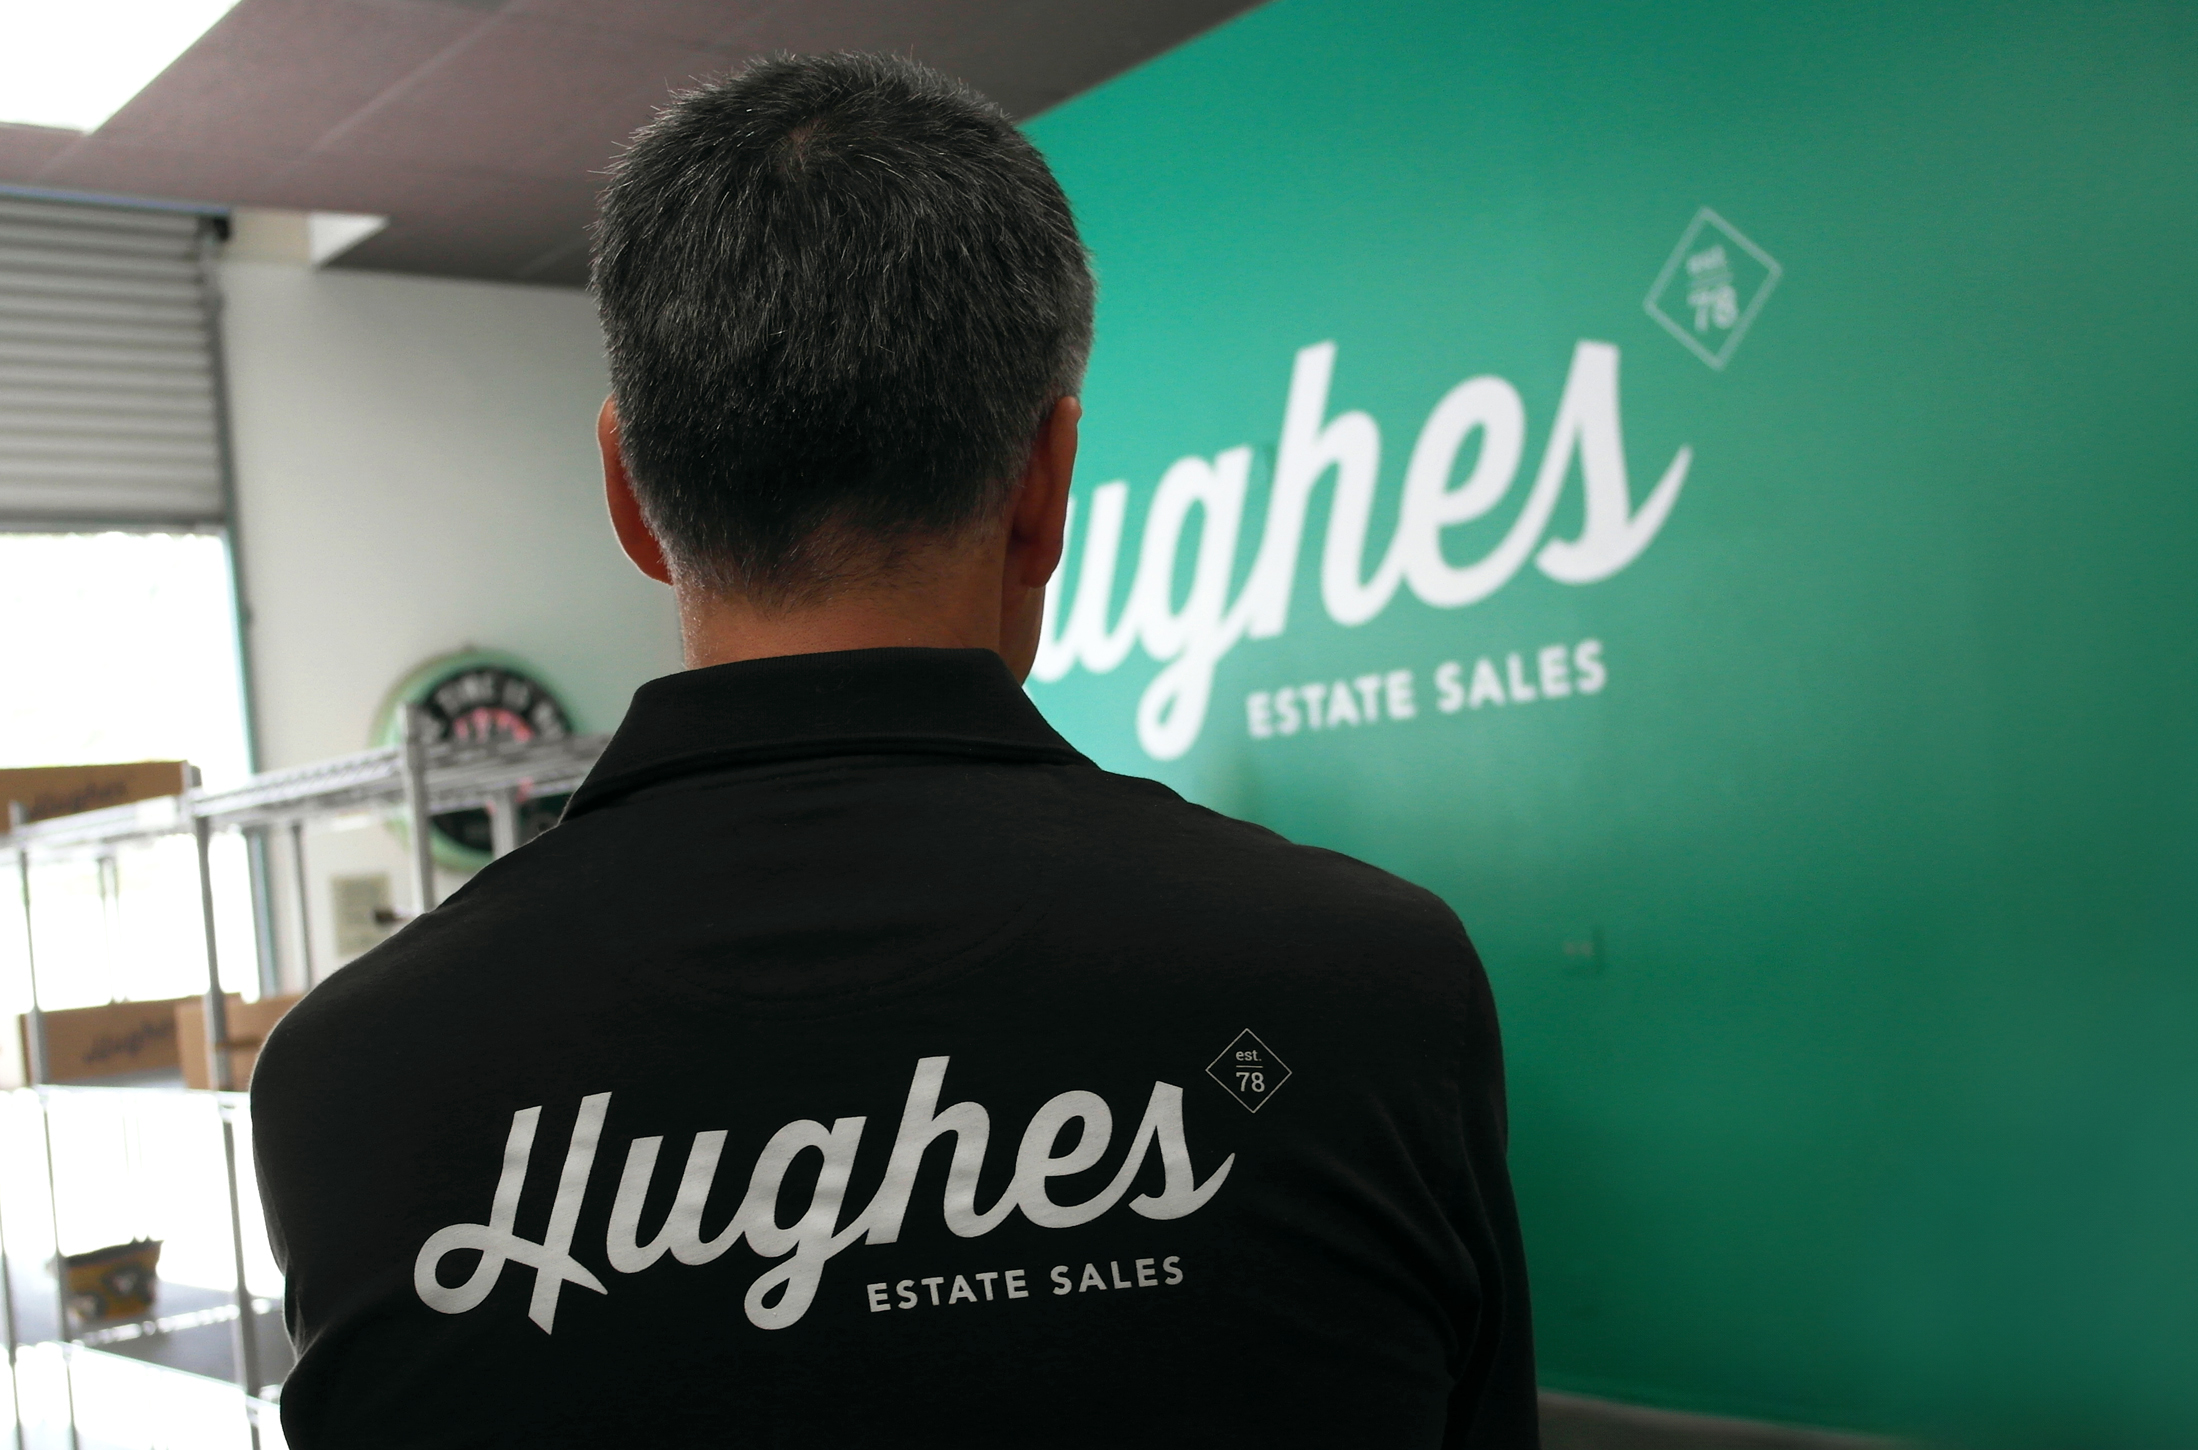 hughes logo white on a black shirt inside the showroom